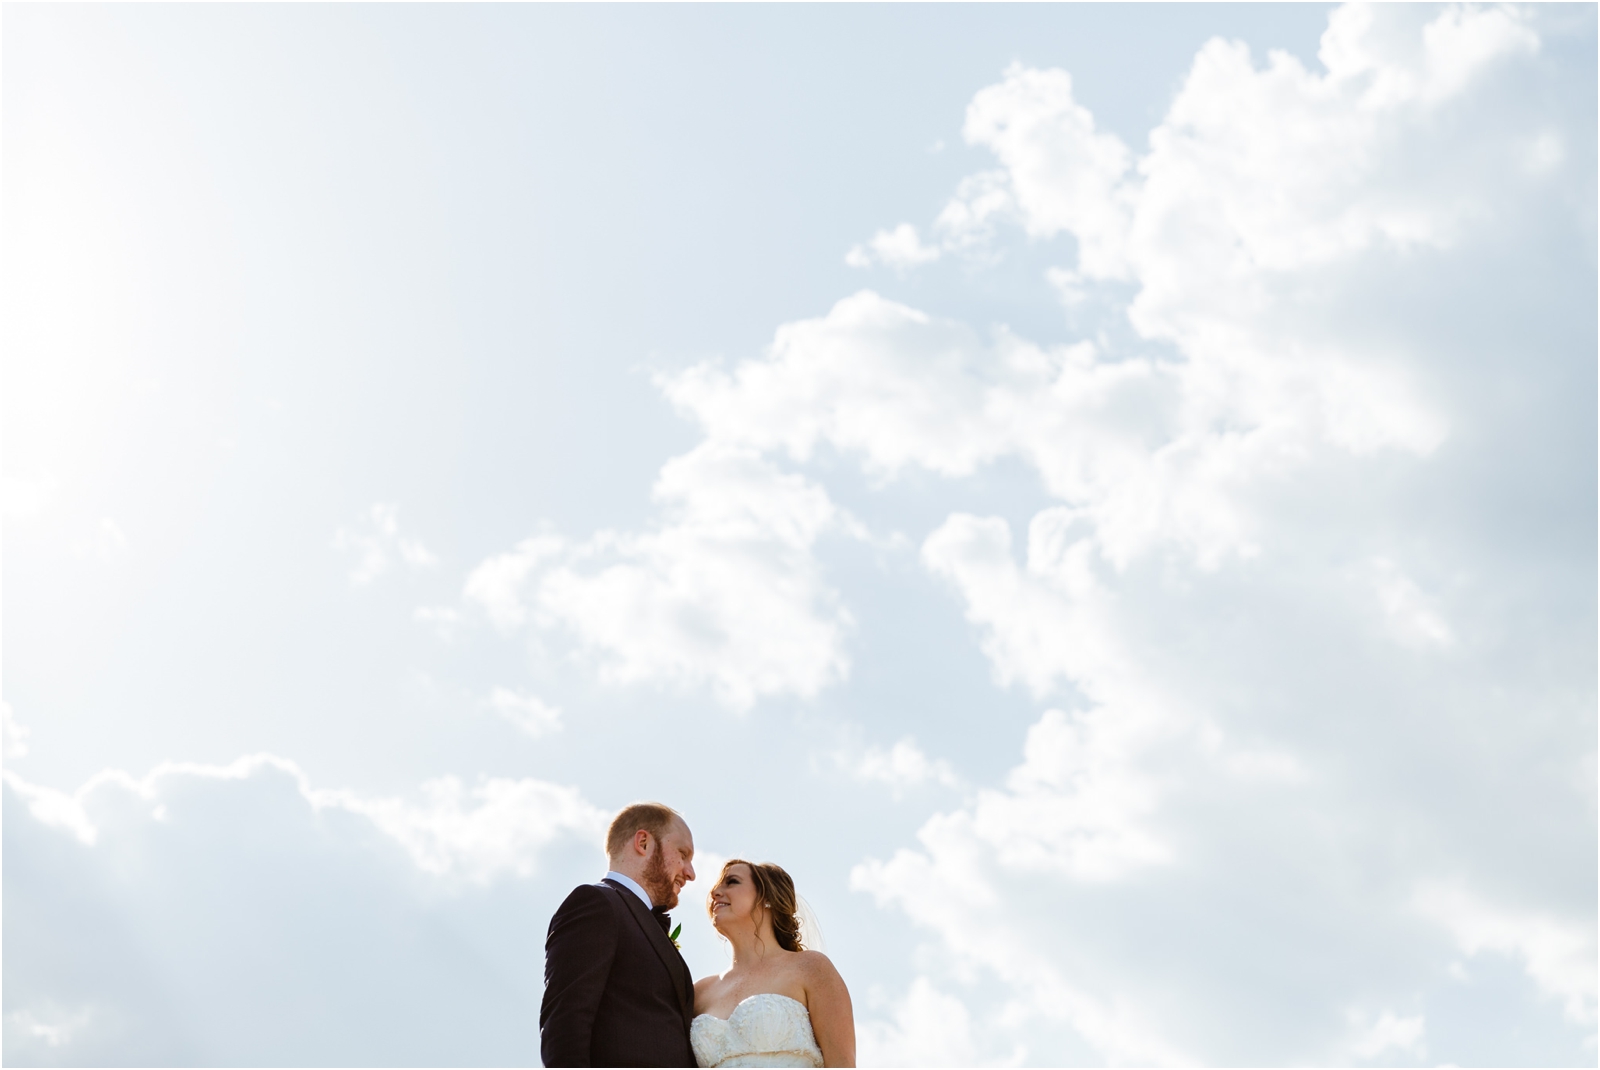 Adler Planetarium Wedding Pictures | Chicago Wedding Photographer 